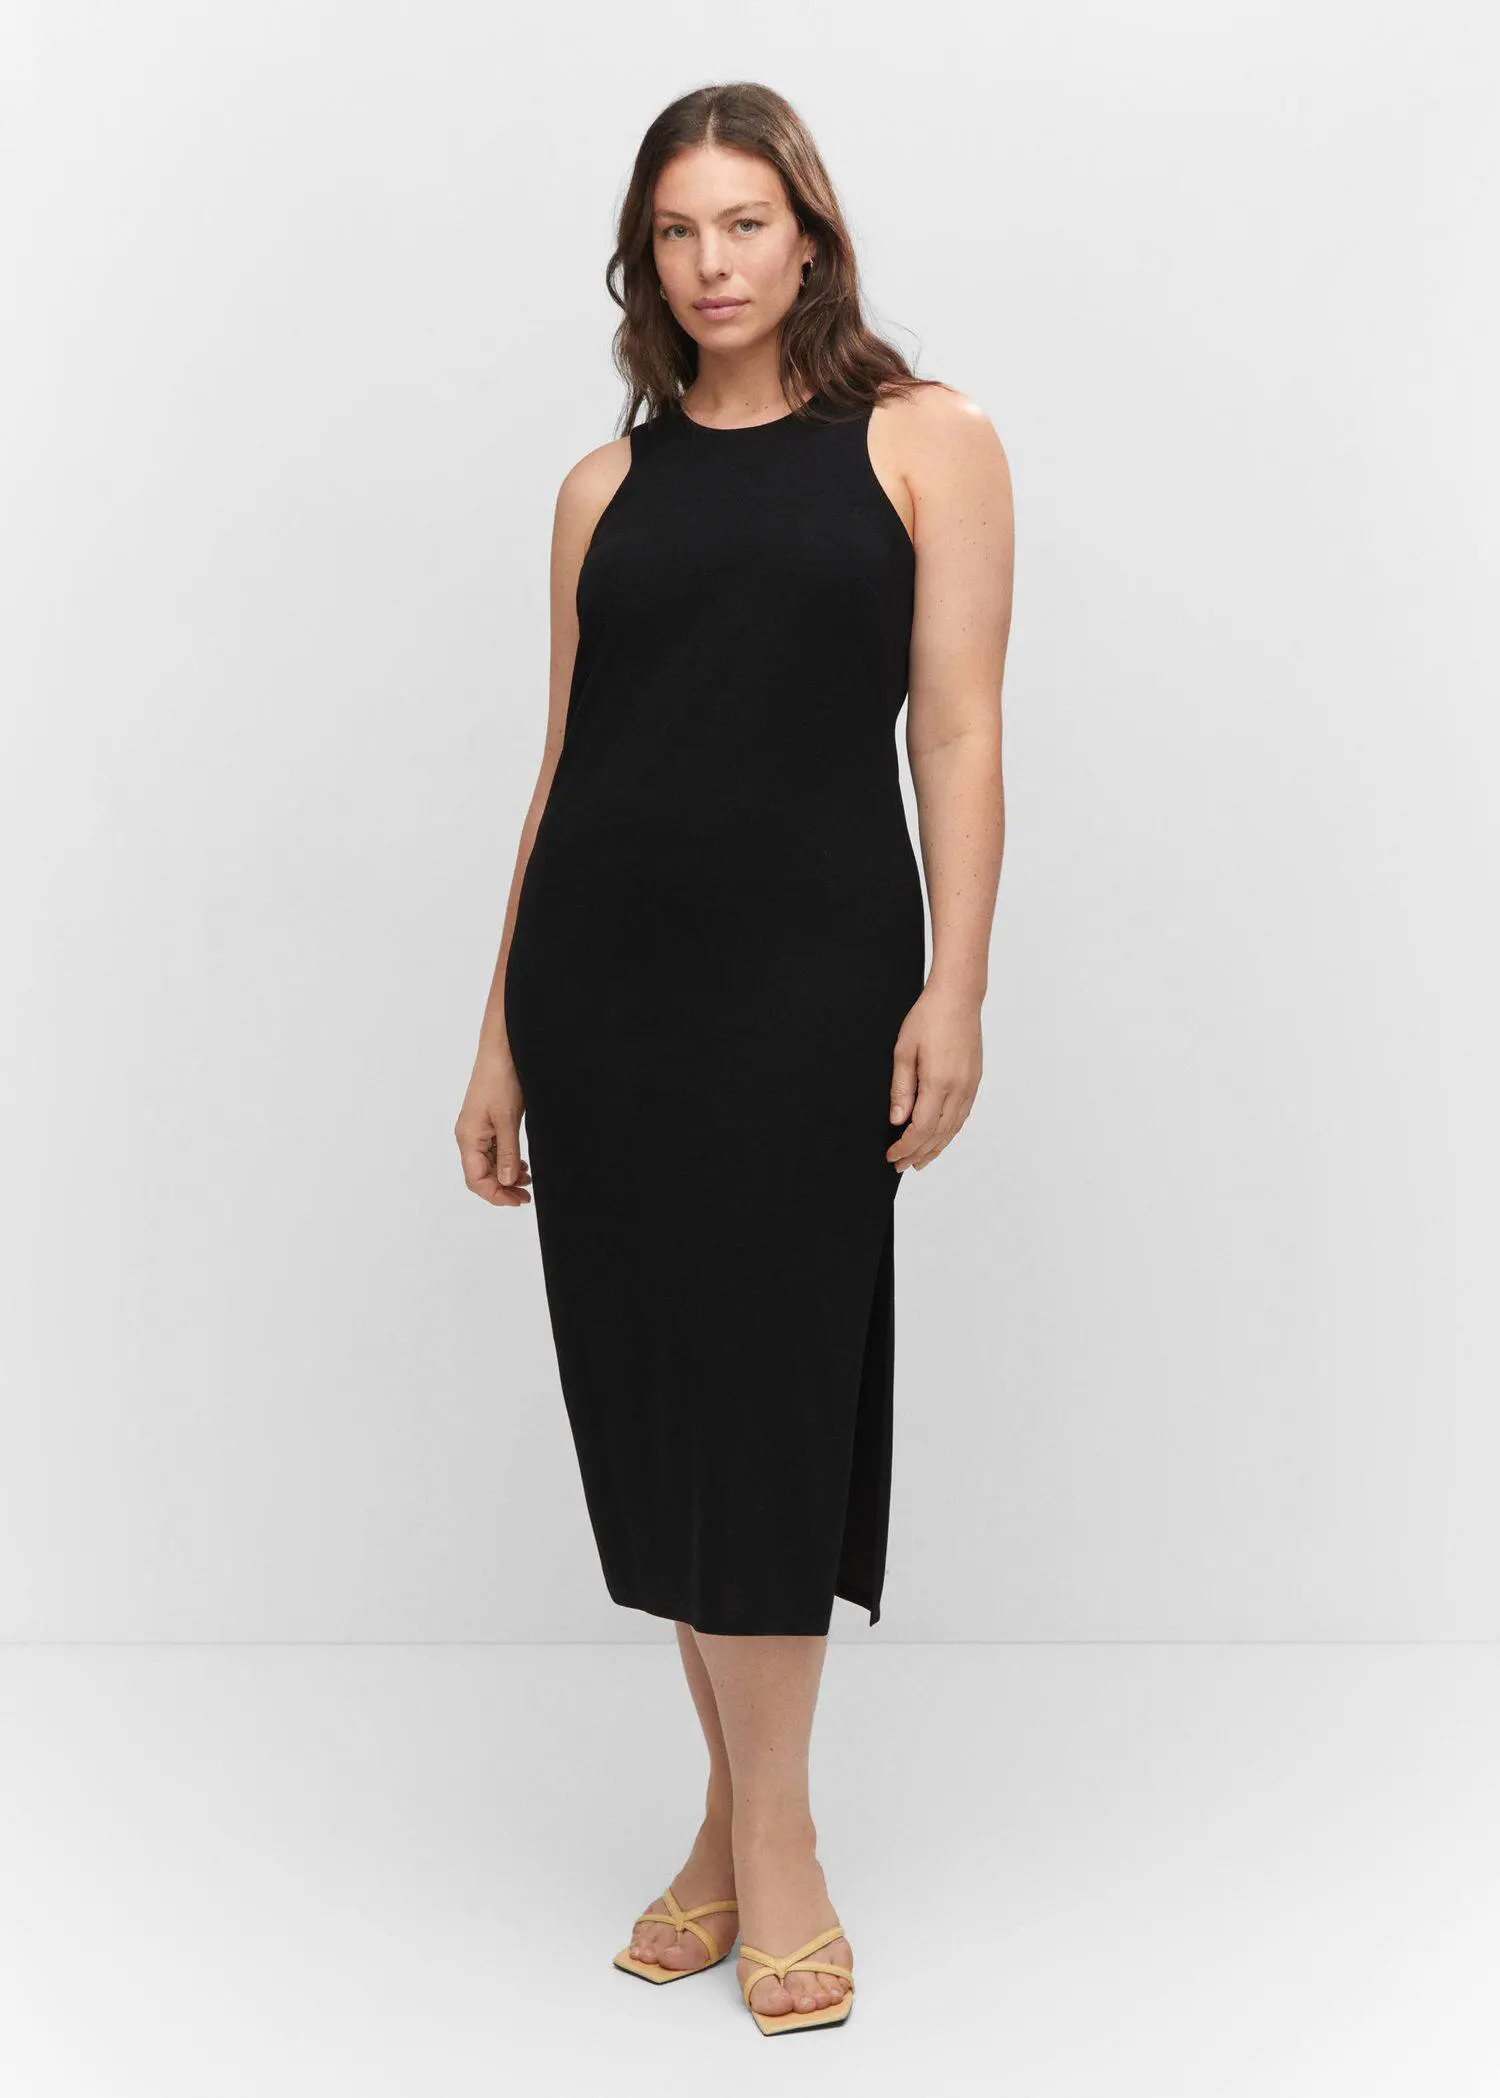 Mango Midi-dress with slit. a woman in a black dress is posing. 